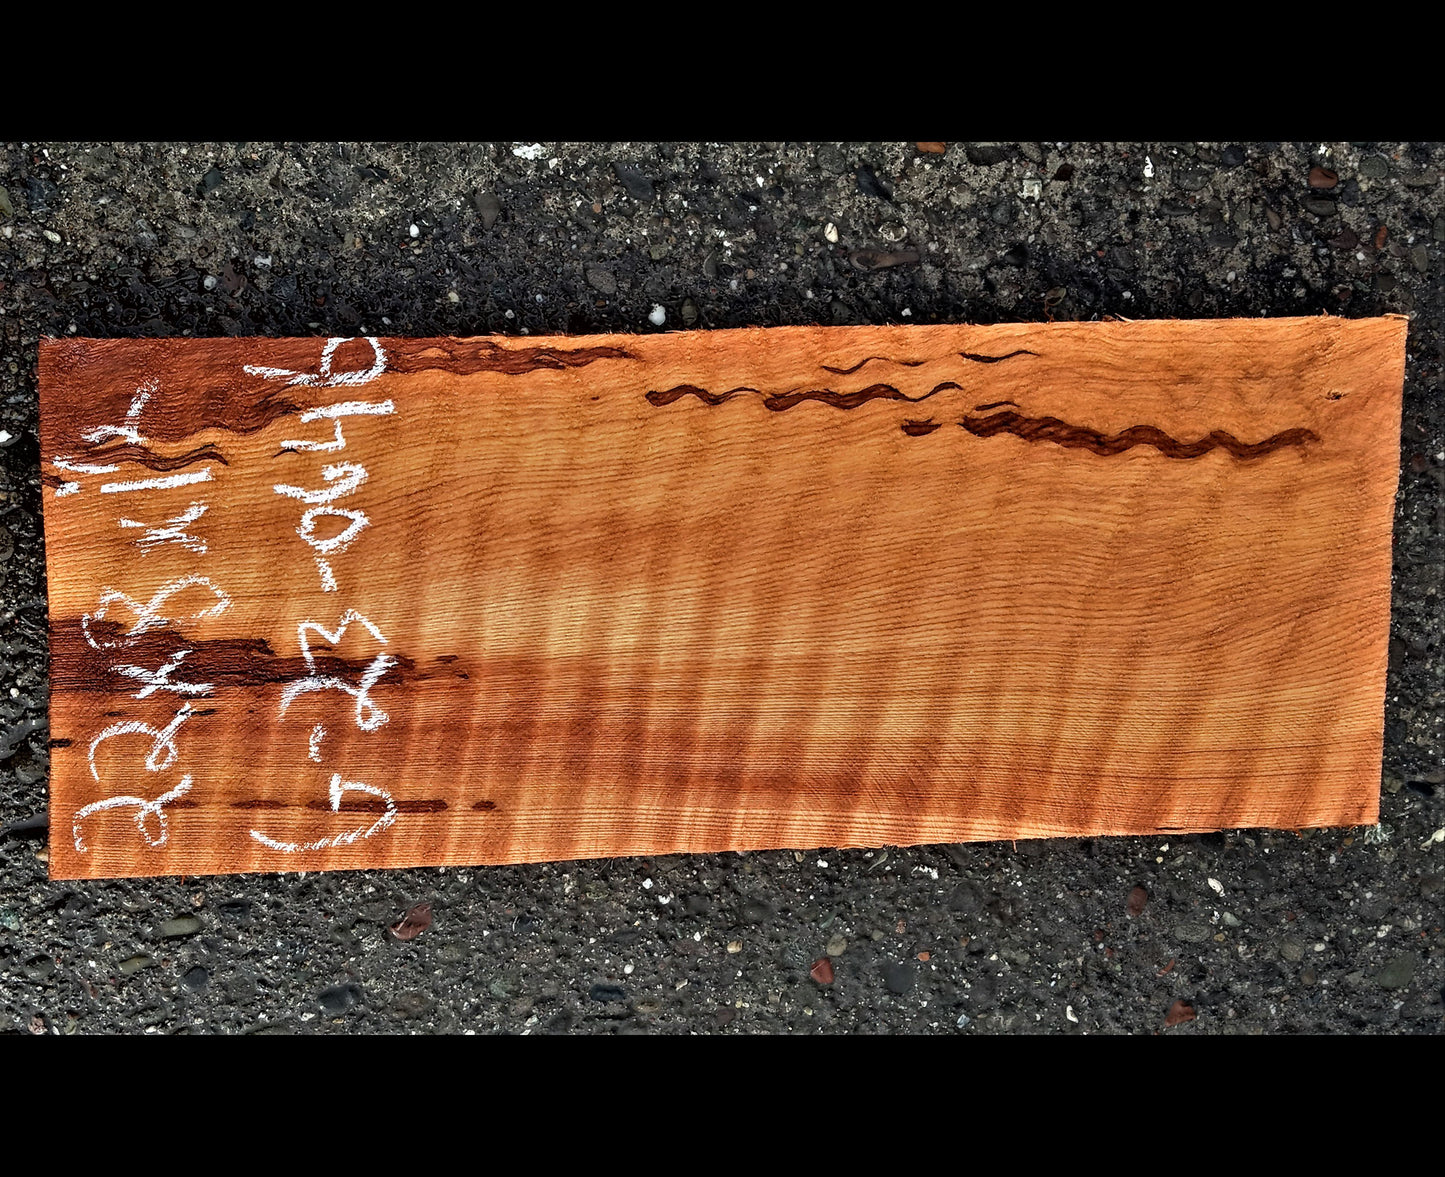 curly redwood | guitar billet | wood turning | DIY crafts | g23-0646